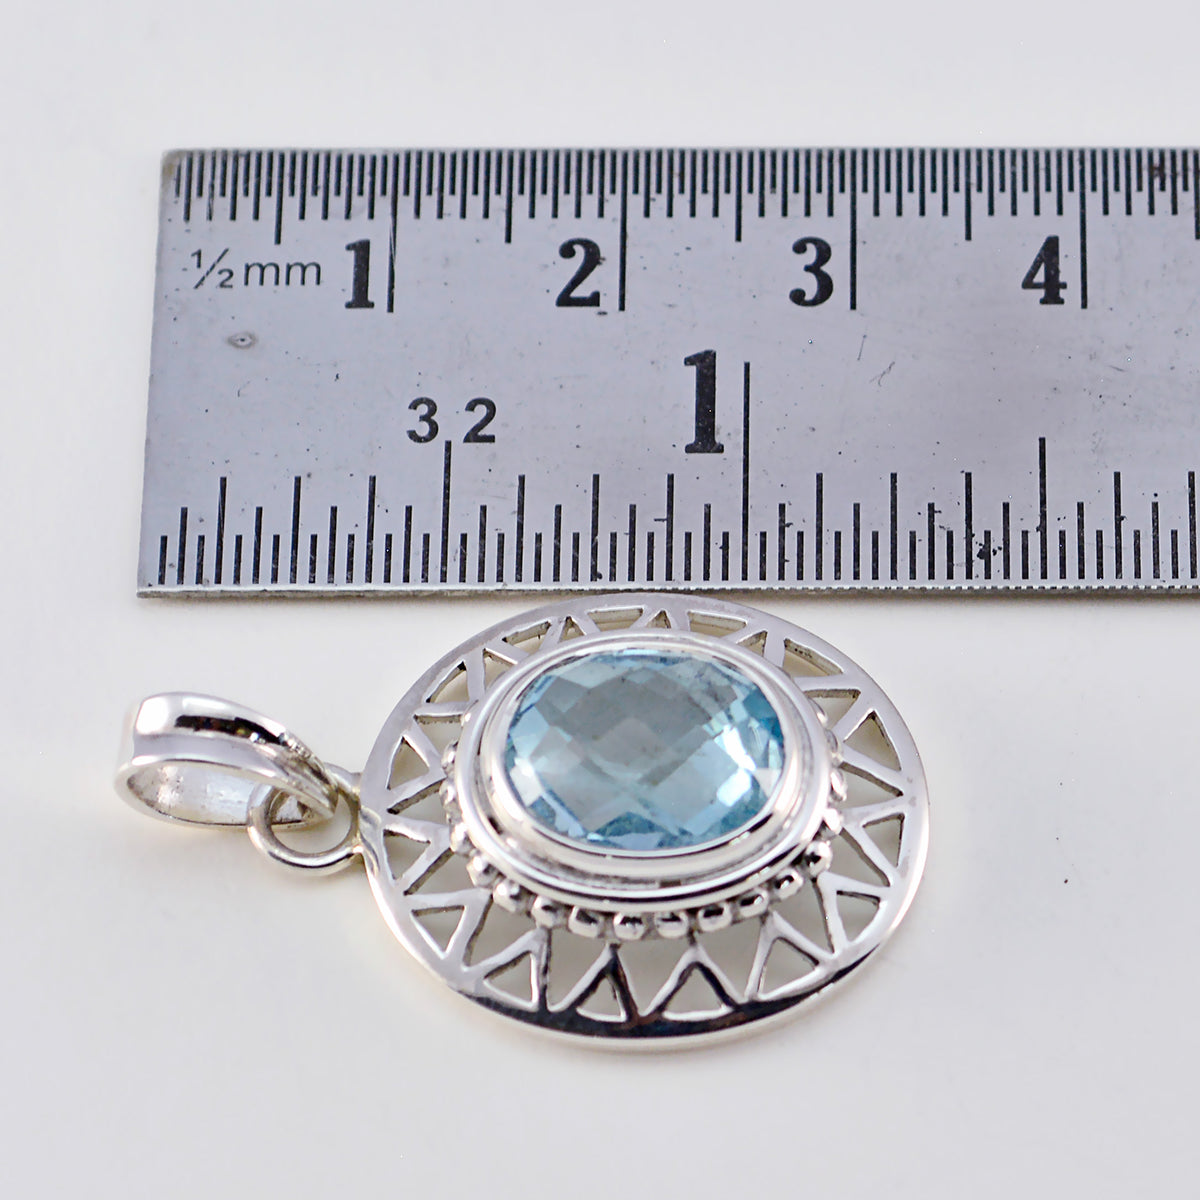 Riyo Real Gemstones Oval checker Blue Blue Topaz Solid Silver Pendant gift for black Friday